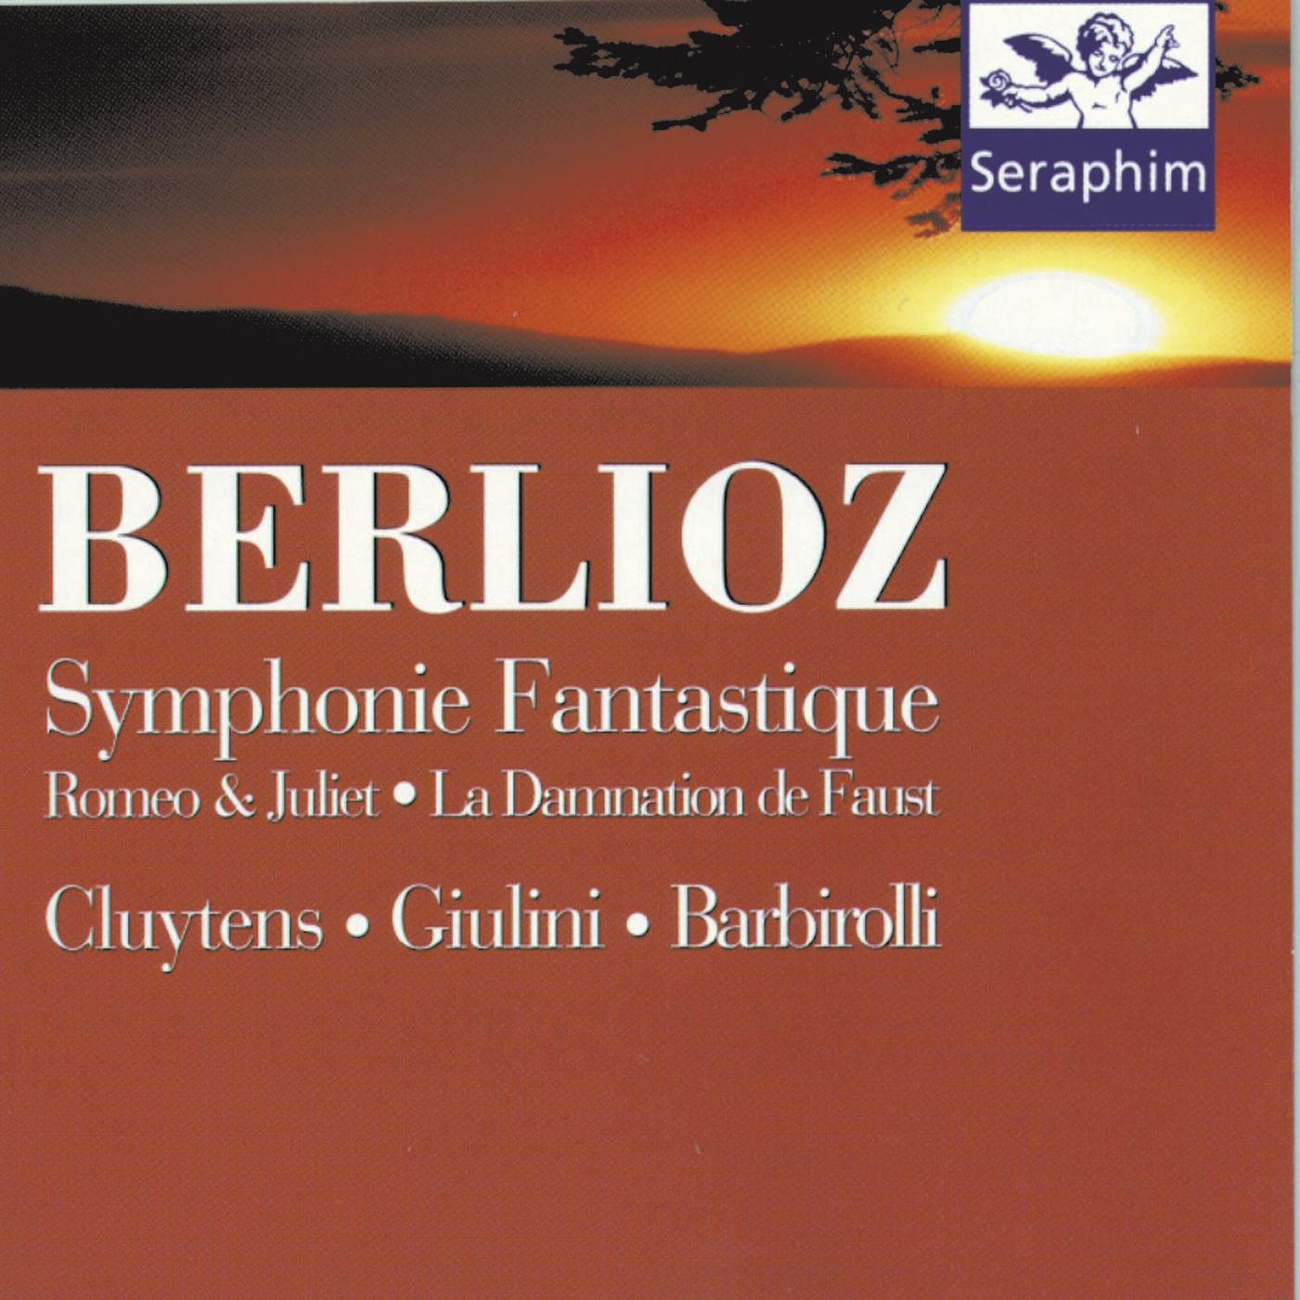 Symphonie fantastique Op. 14 (1989 Digital Remaster): I.   Rêveries - Passions